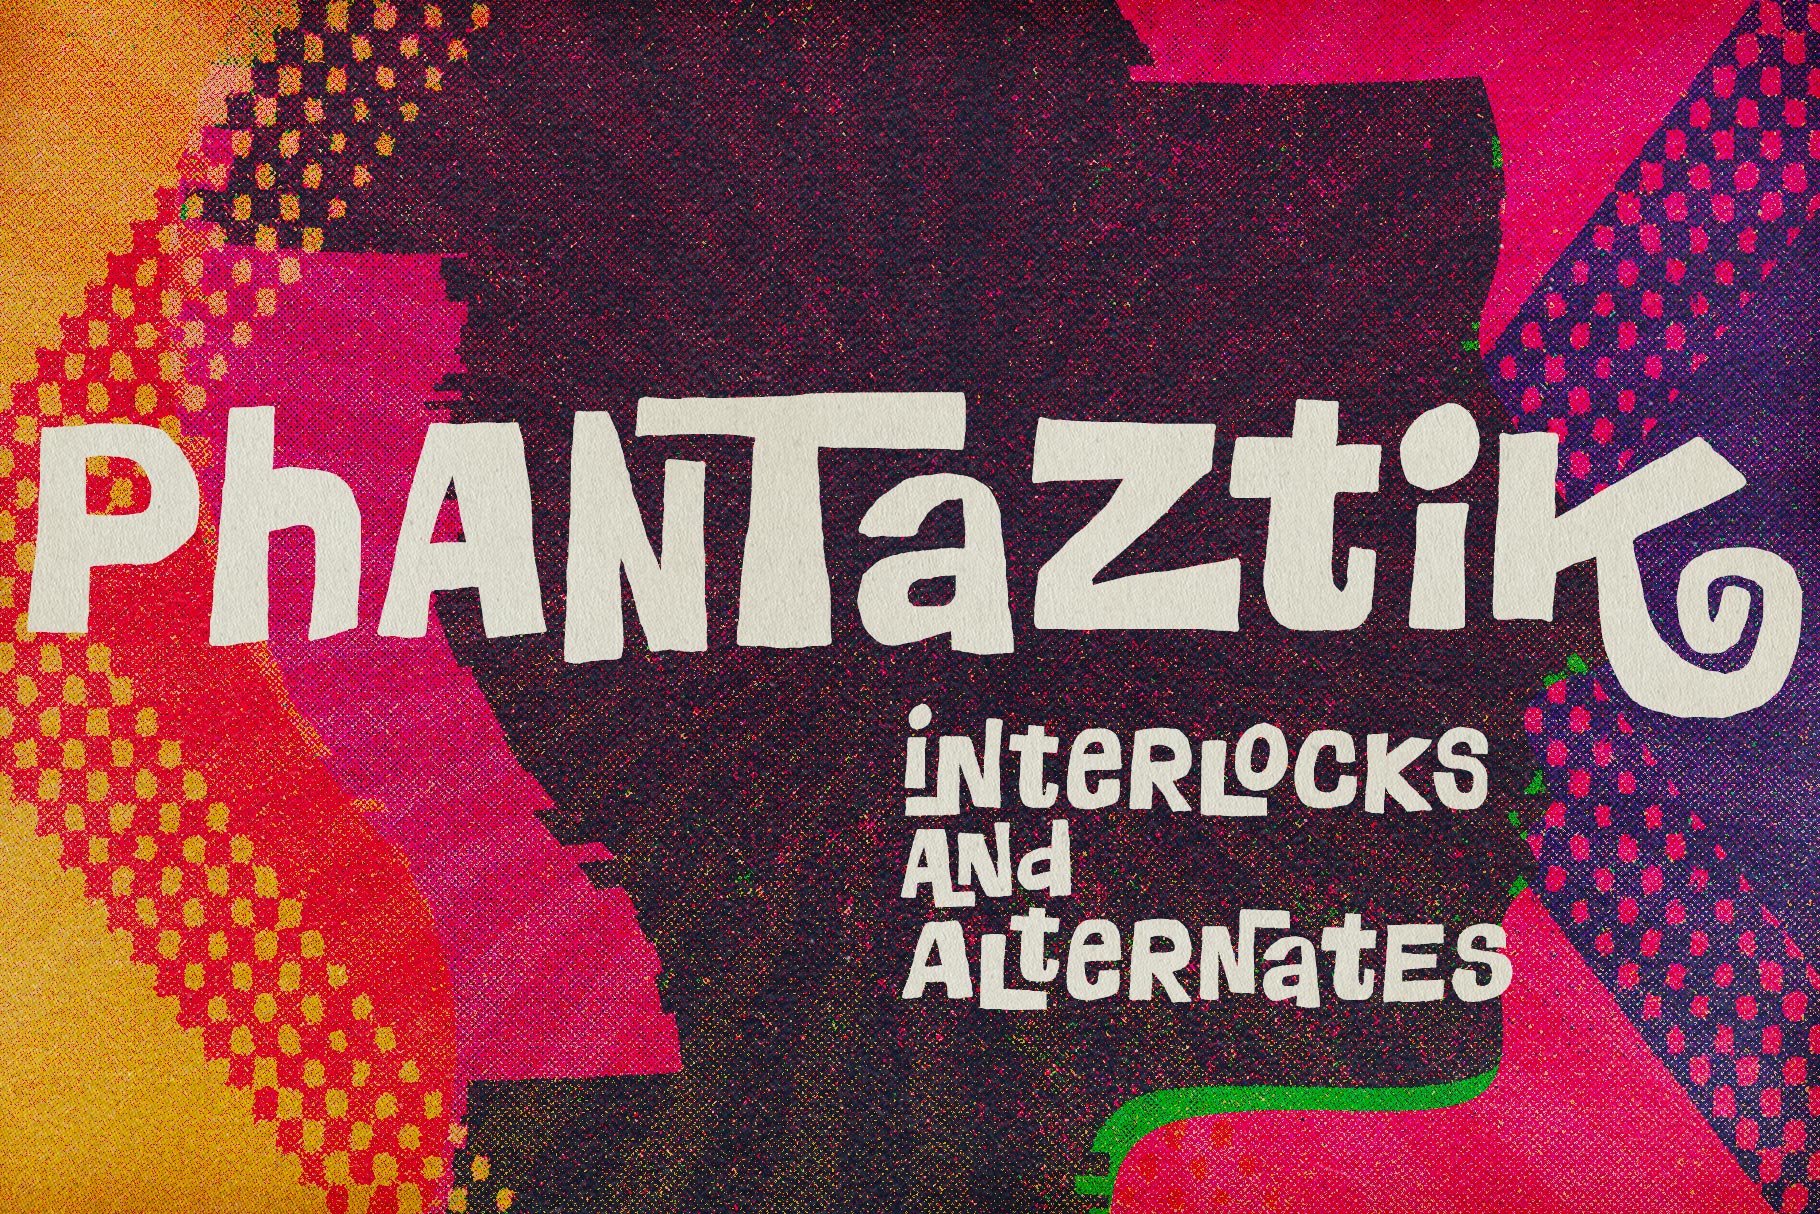 Phantaztik | Groovy Interlocks cover image.